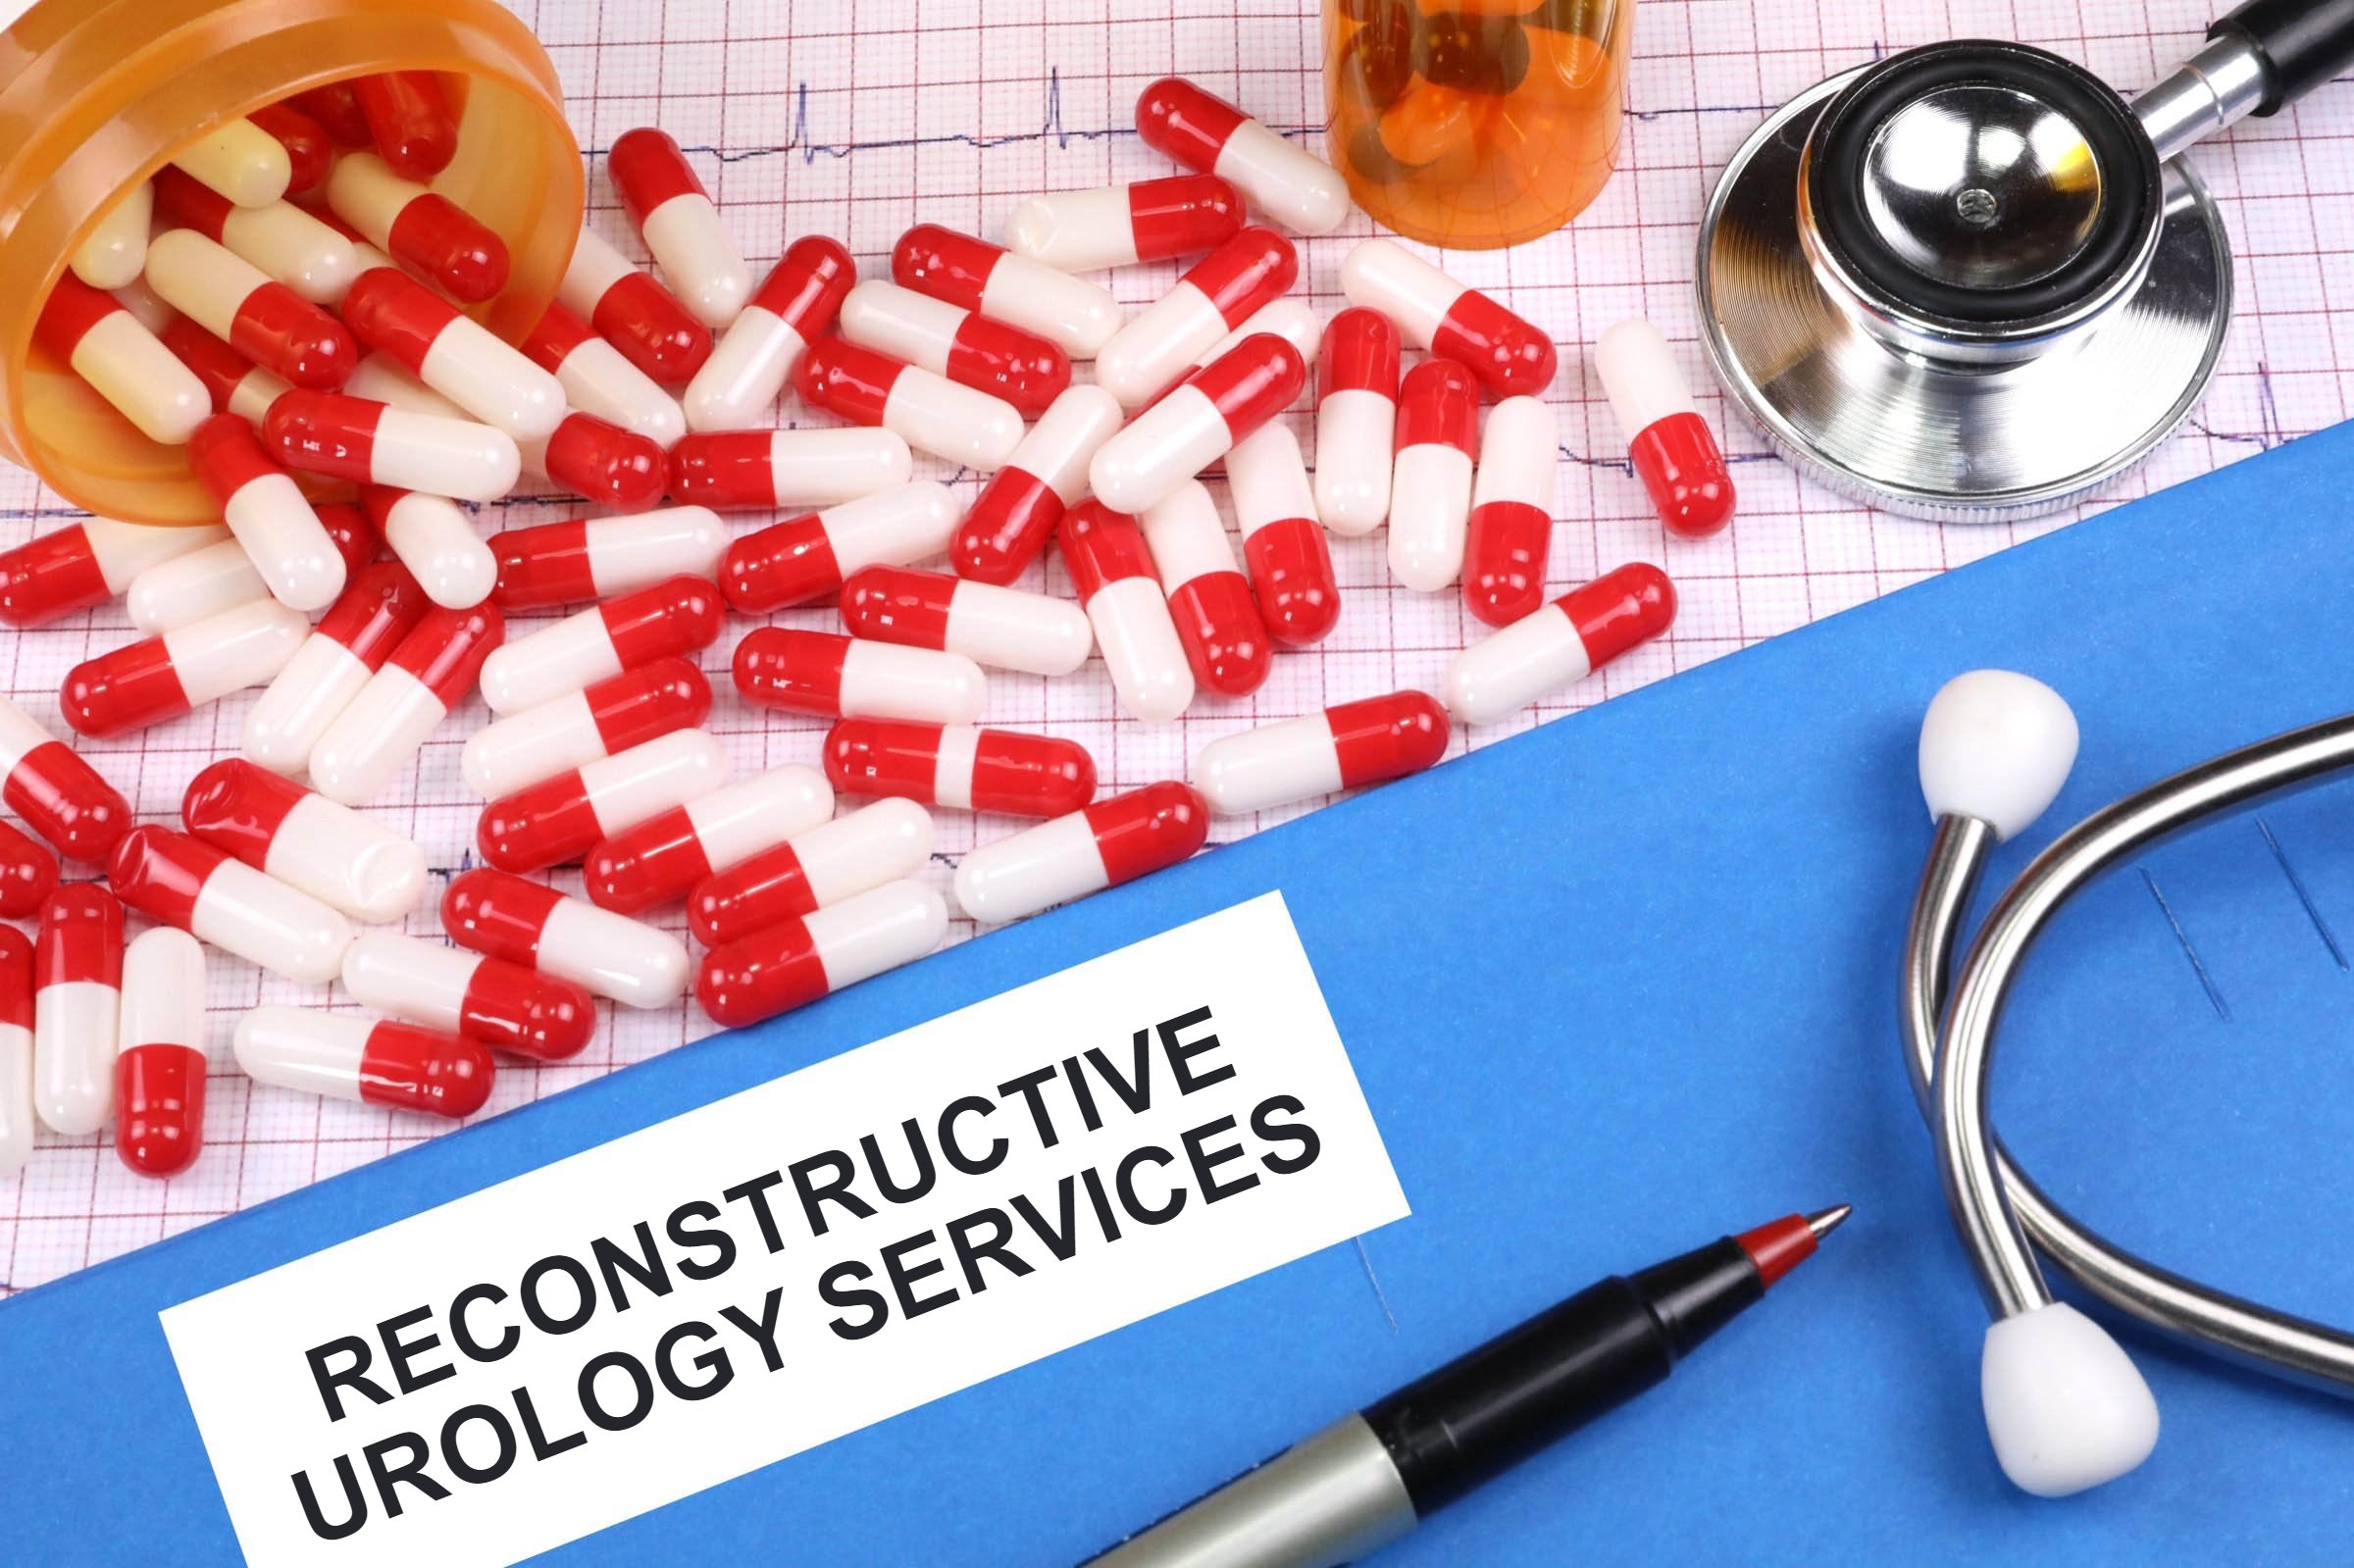 reconstructive urology services